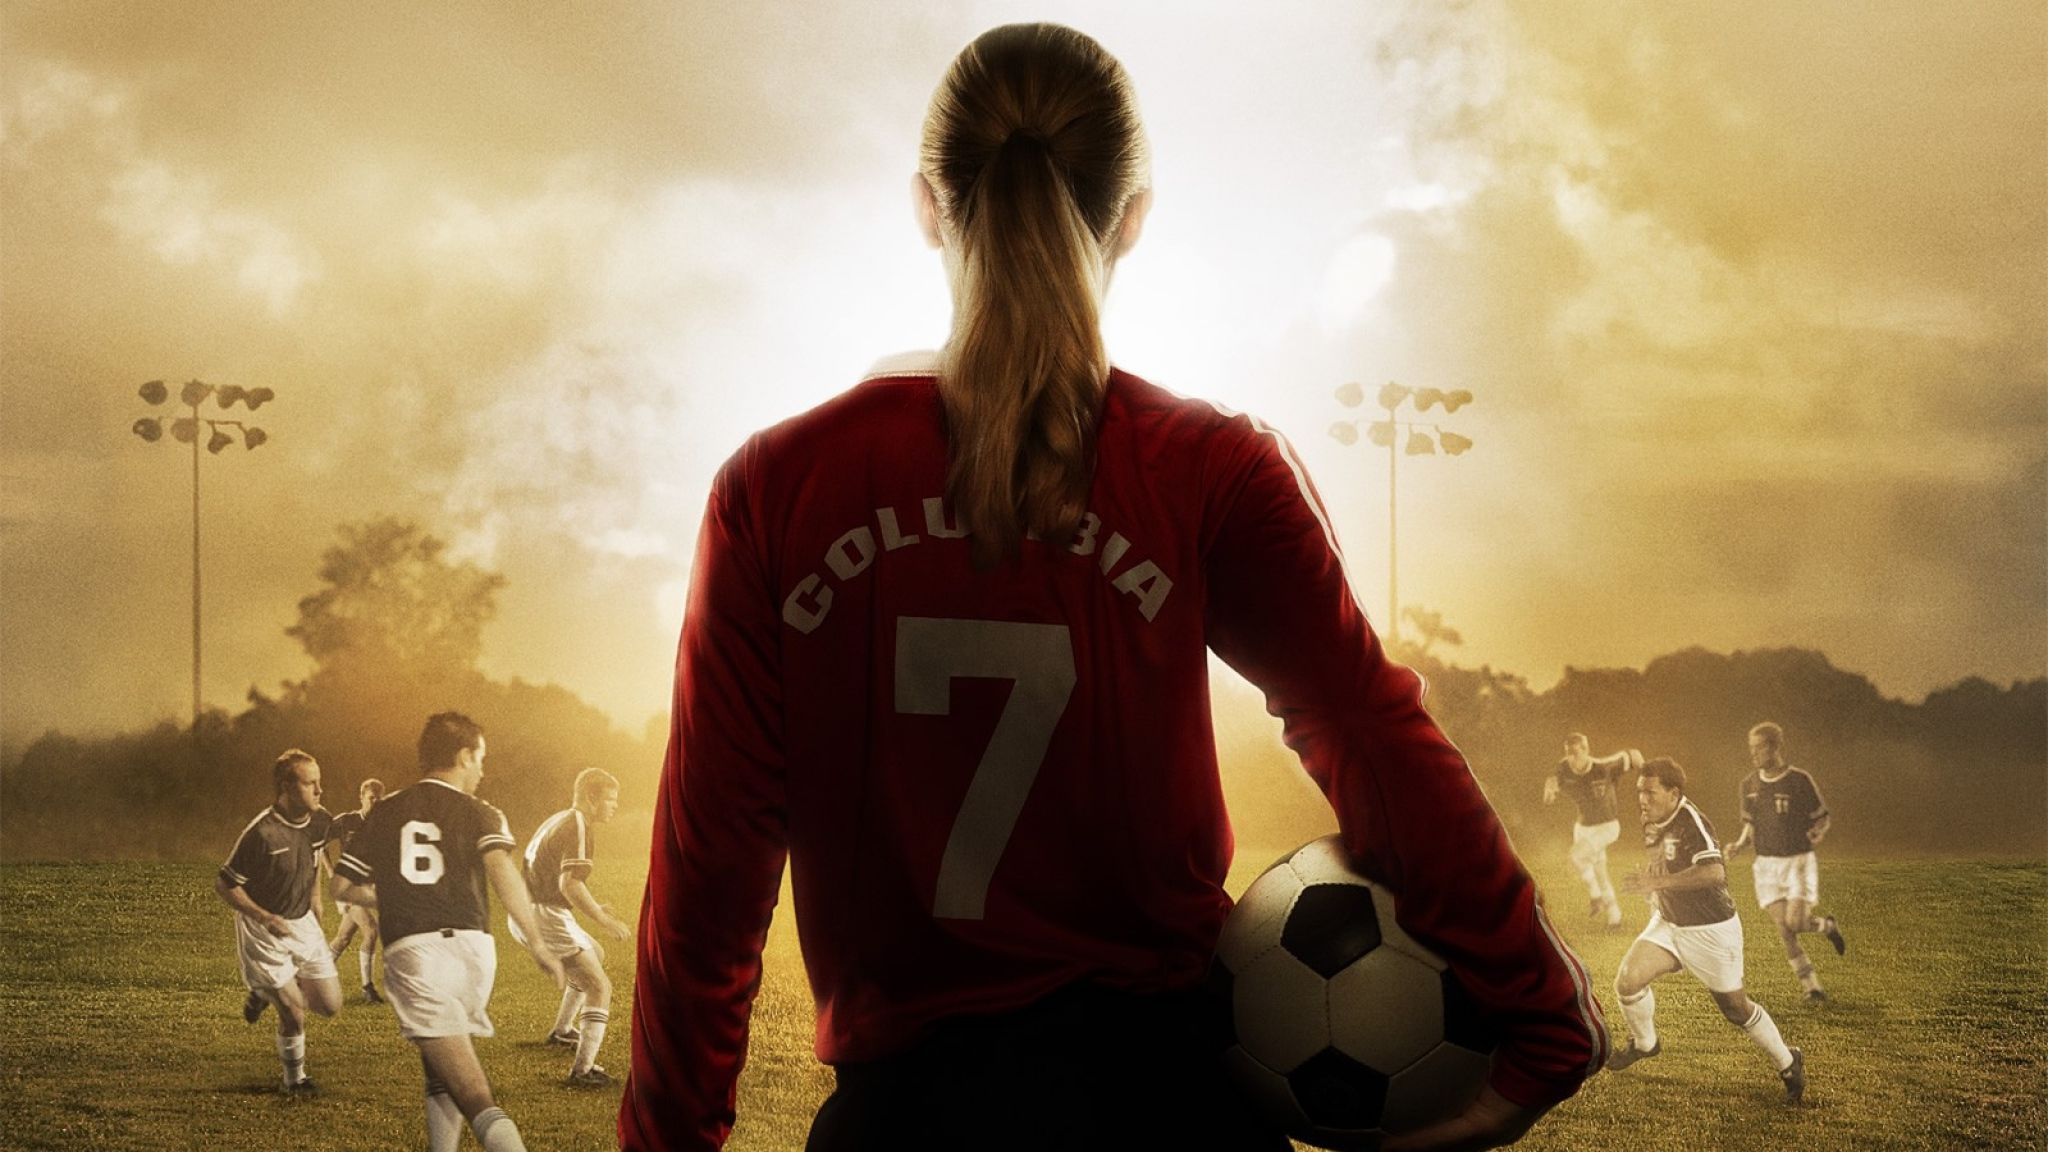 Download Wallpaper 2048x1152 Gracie, Footballer, Girl, Soccer